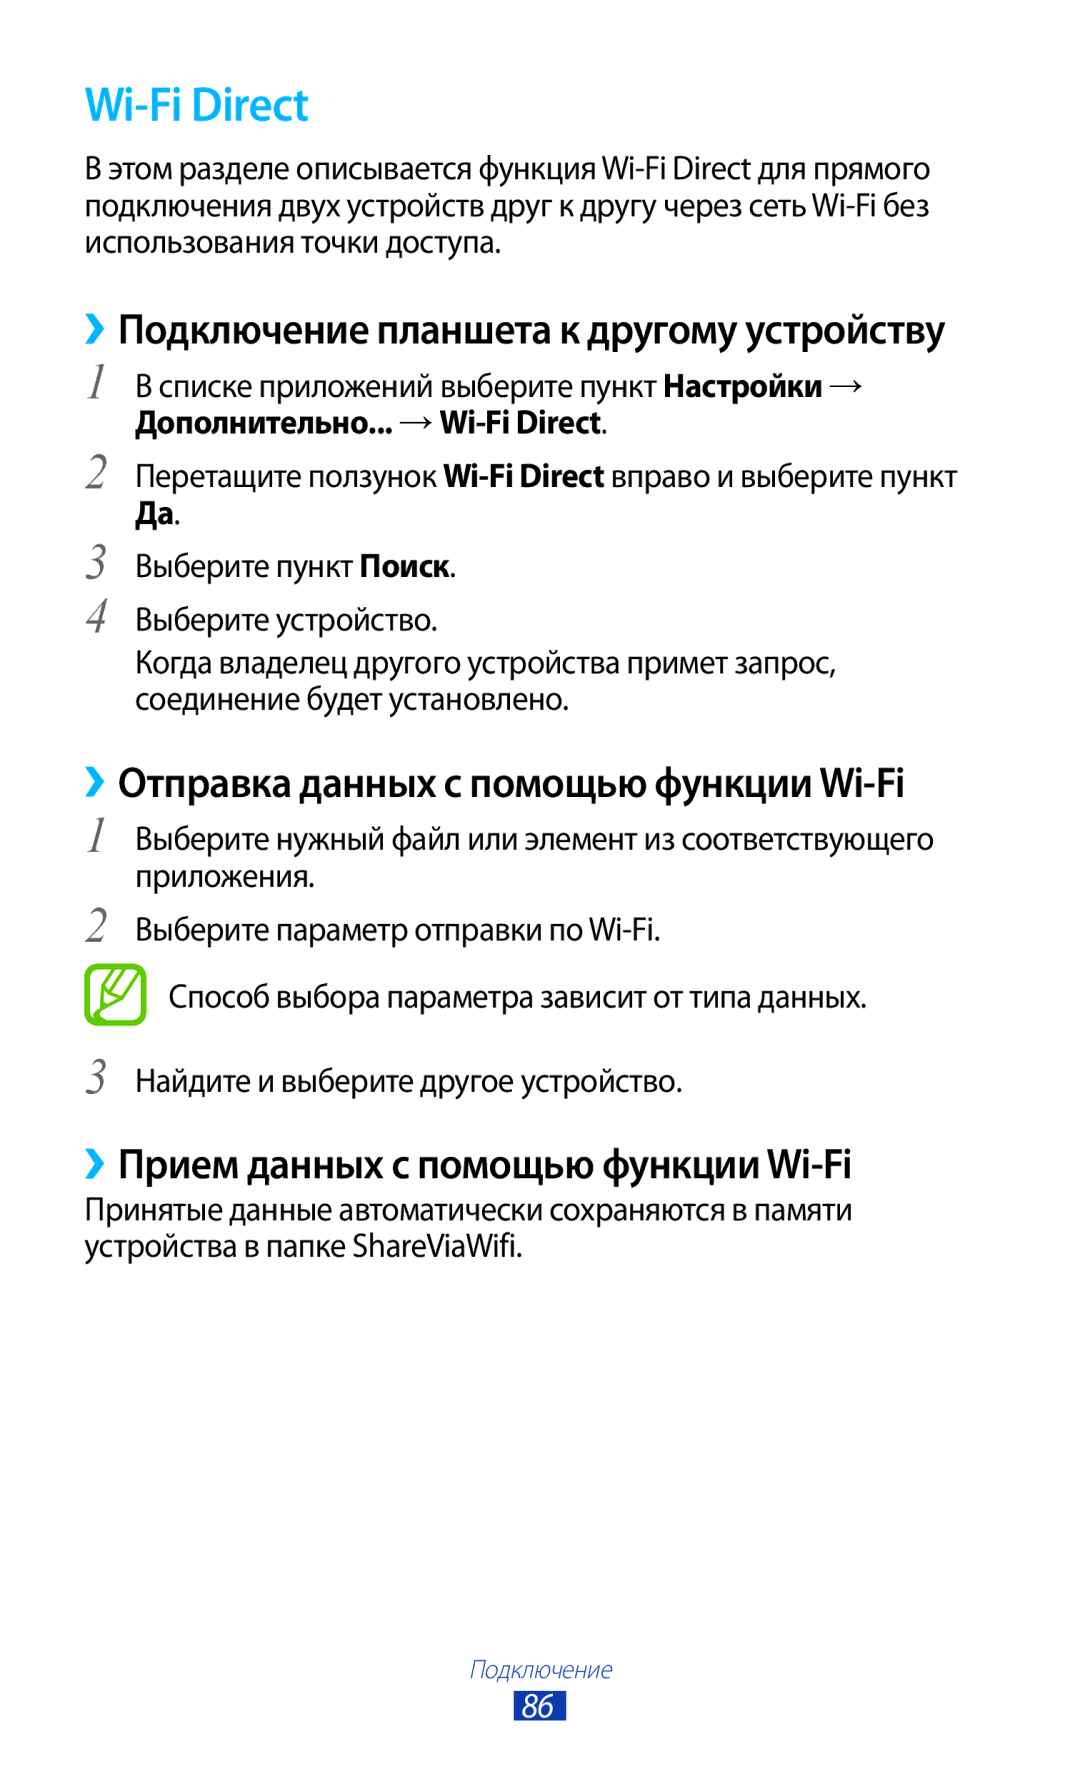 Samsung GT-P6210UWASER Wi-Fi Direct, ››Отправка данных с помощью функции Wi-Fi, ››Прием данных с помощью функции Wi-Fi 